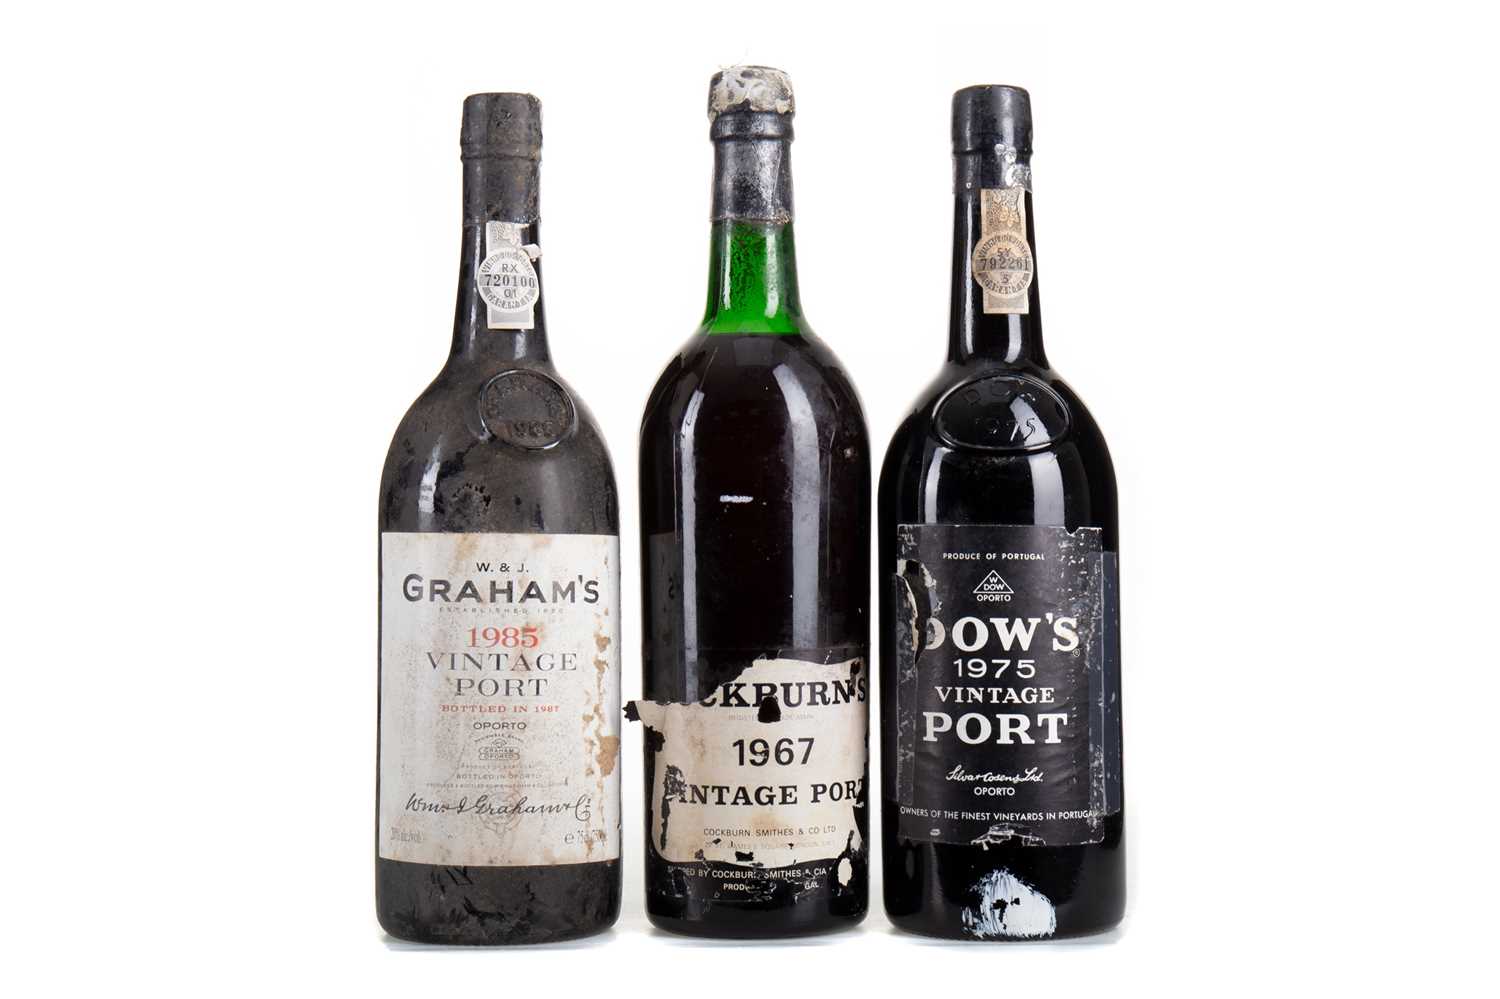 3 BOTTLES OF PORT - COCKBURN'S 1967, DOW'S 1975 AND GRAHAM'S 1985